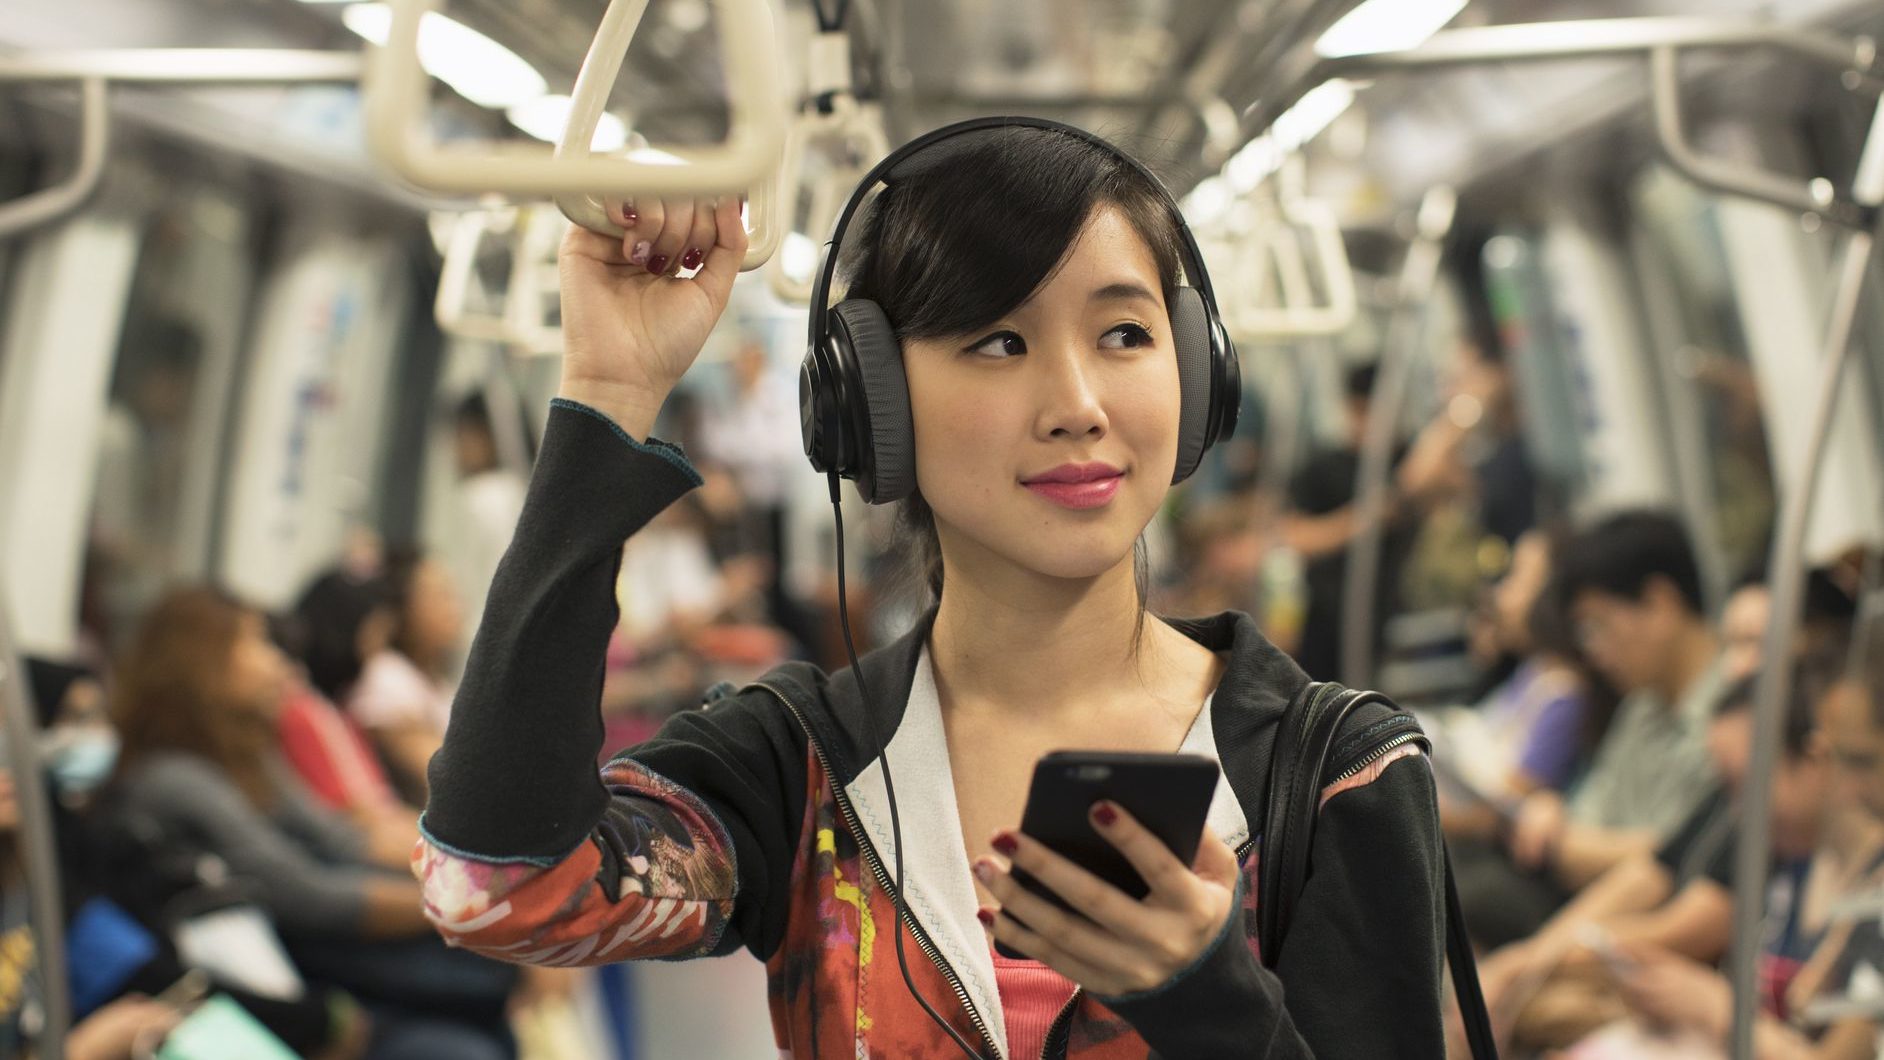 He to music now. Японские девушки в метро. Listen to the Music. Фото на телефон. People listen to Music.